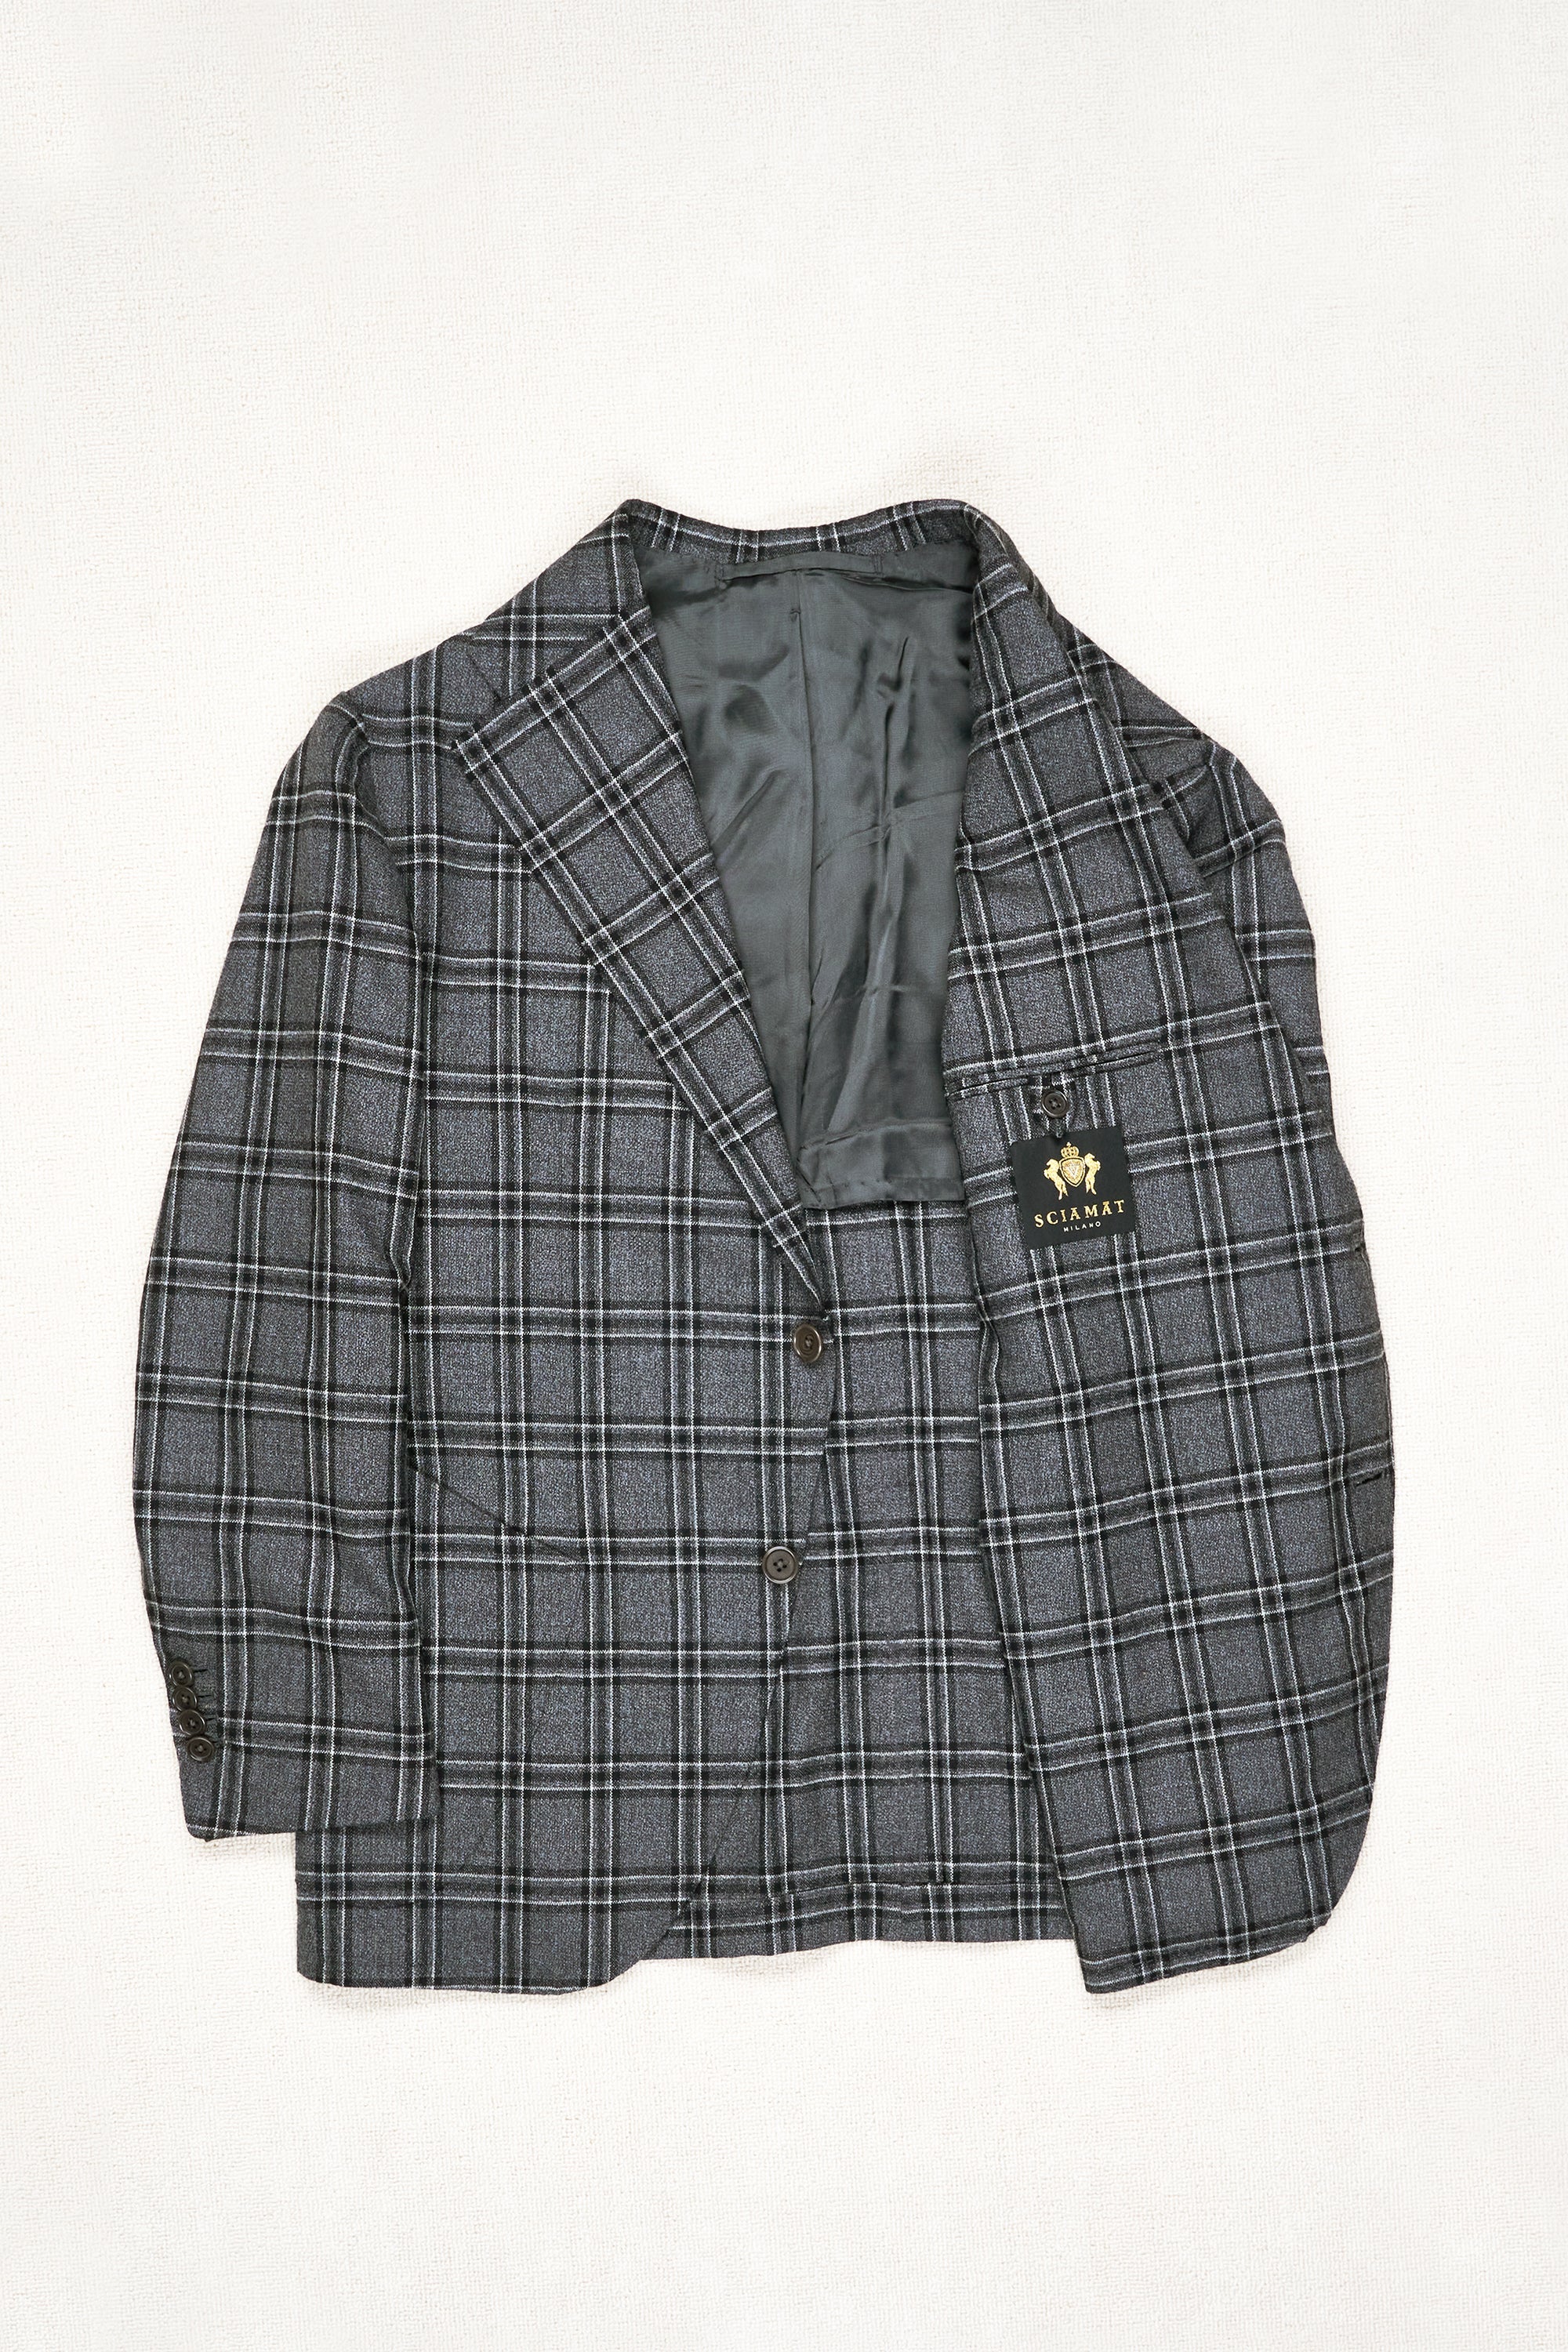 Sciamat Grey/Black/White Check Wool Sport Coat